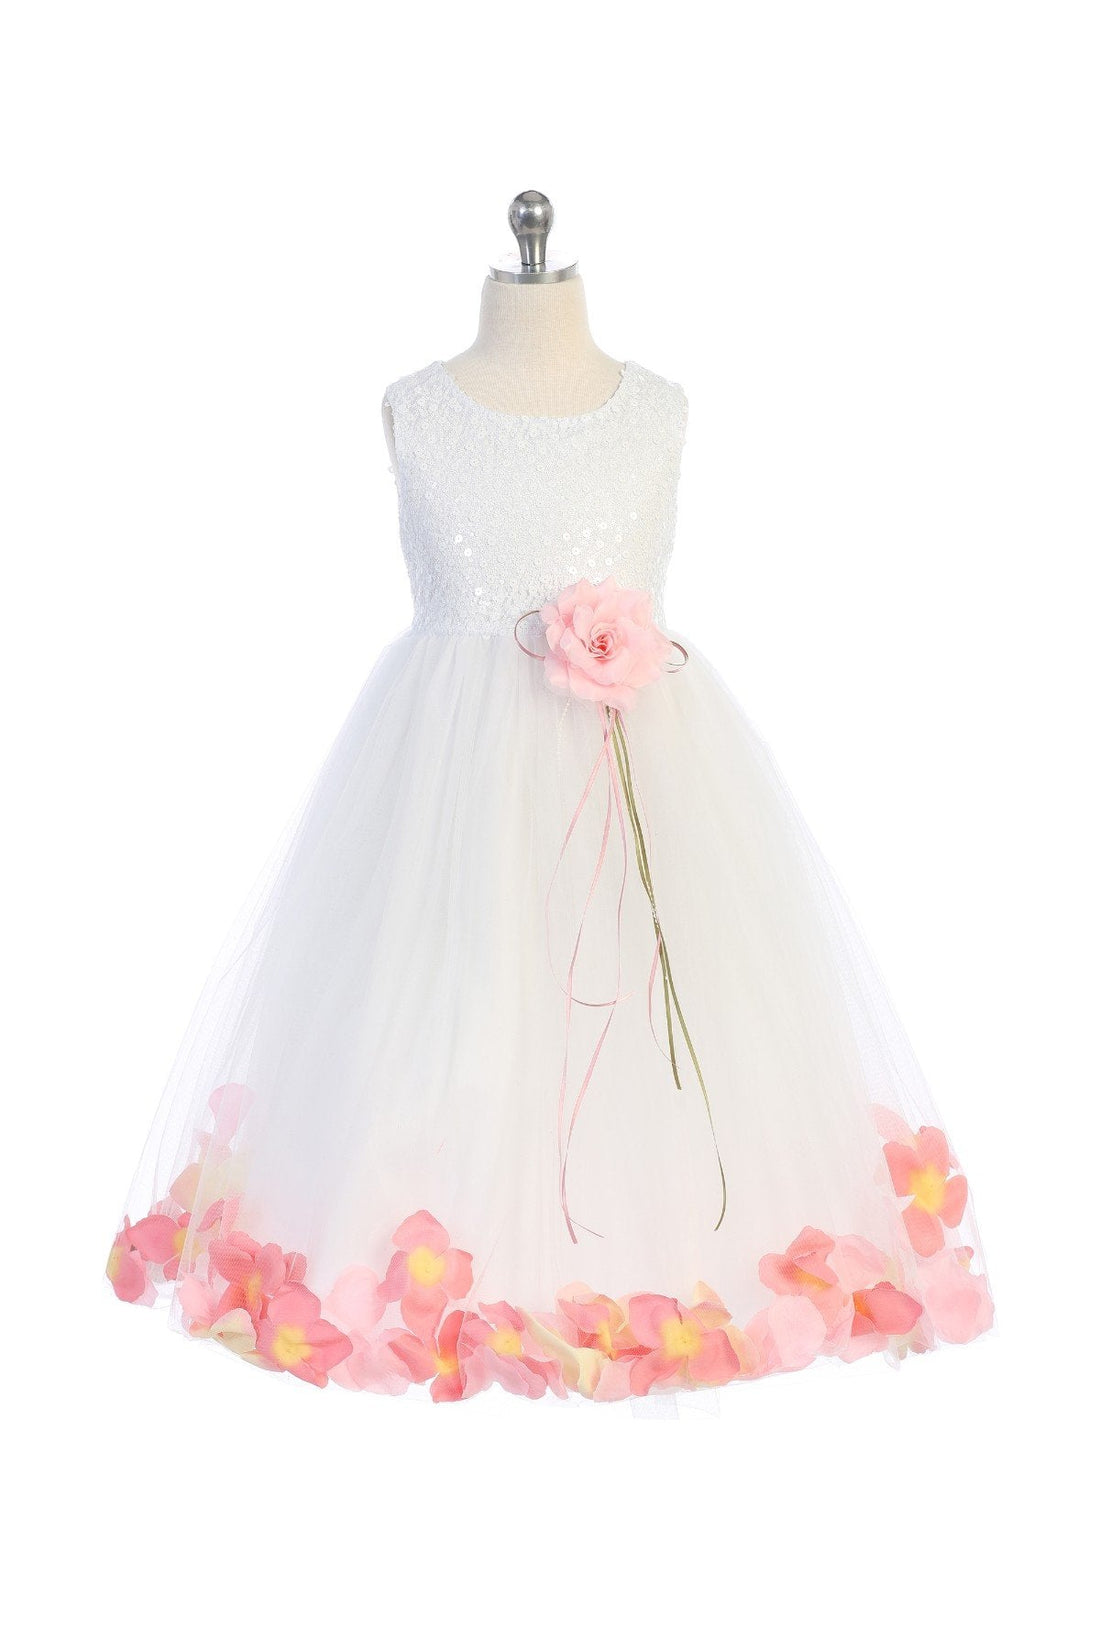 Sequin Top Petal Flower Girl Dress 1of 2 by AS160C Kids Dream - Girl Formal Dresses